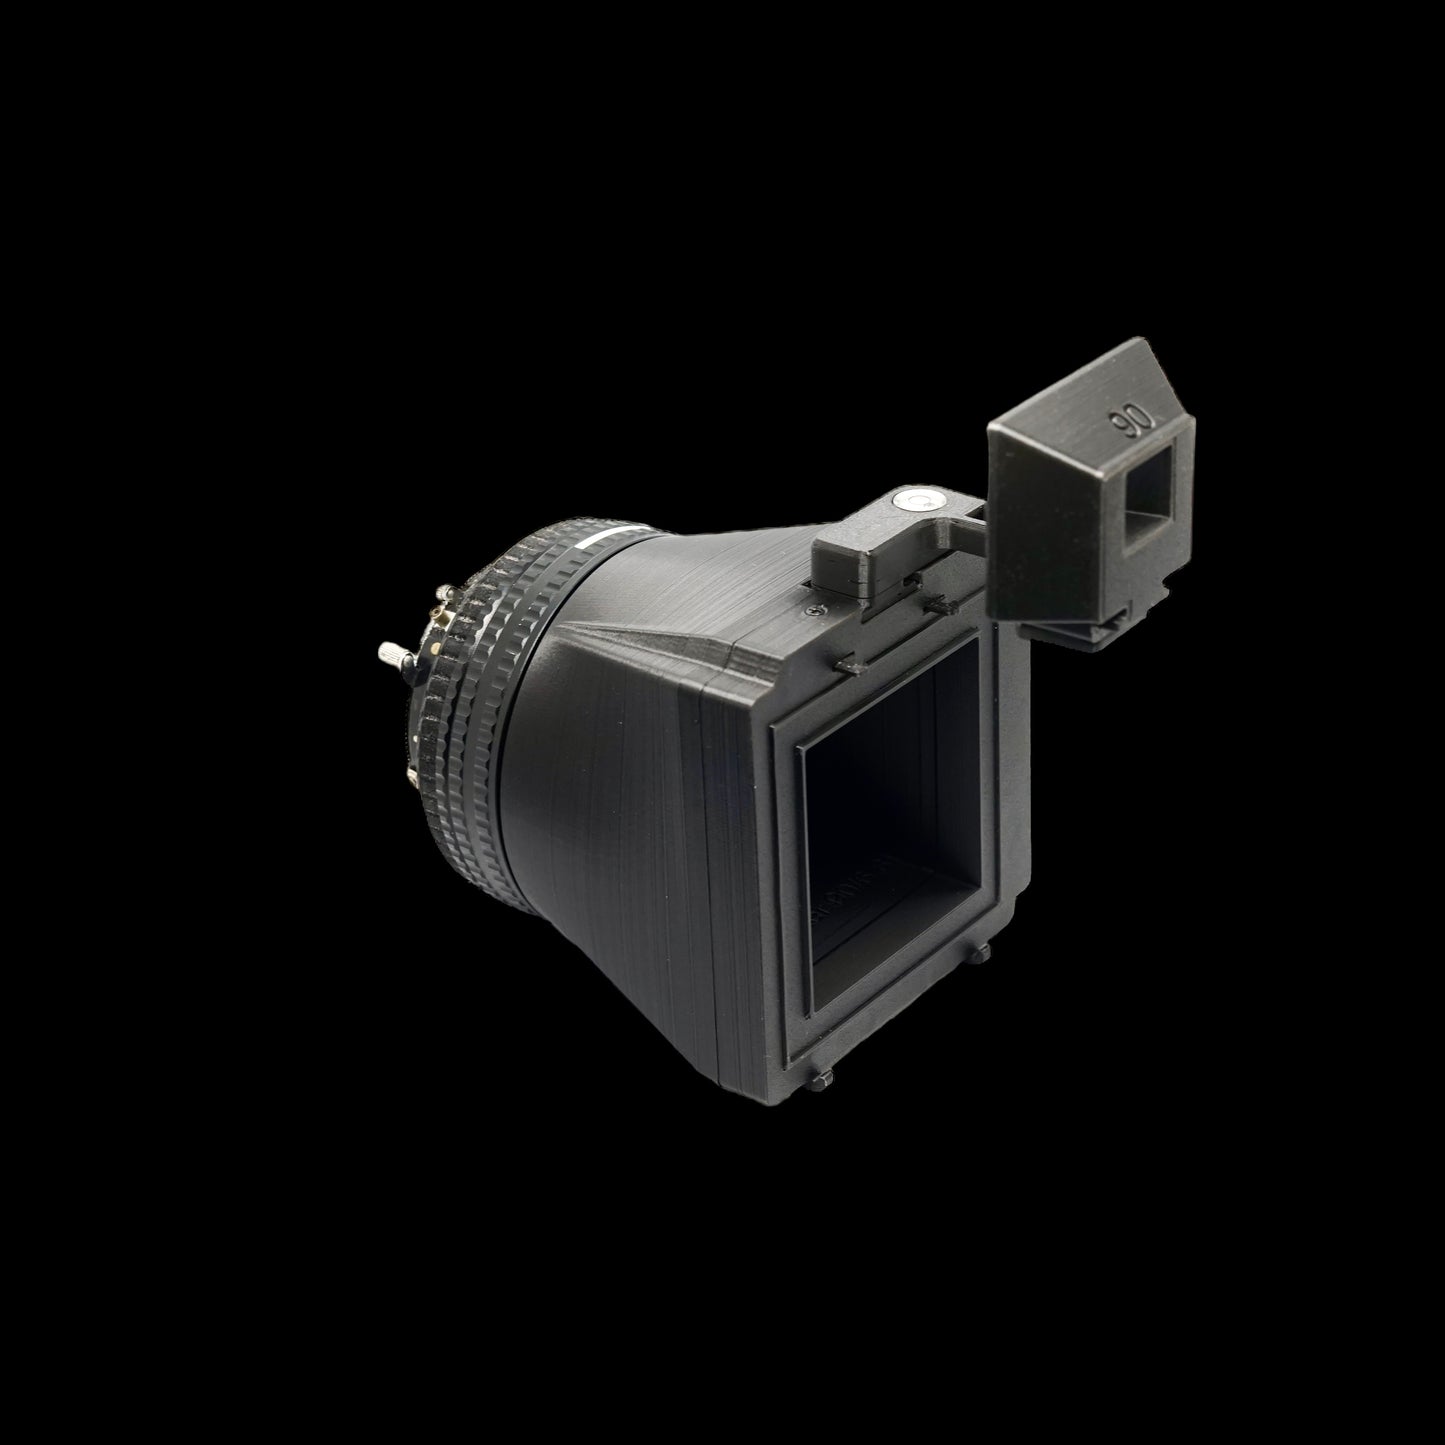 6x6 Medium Format System with Schneider 90mm F6.8 lens